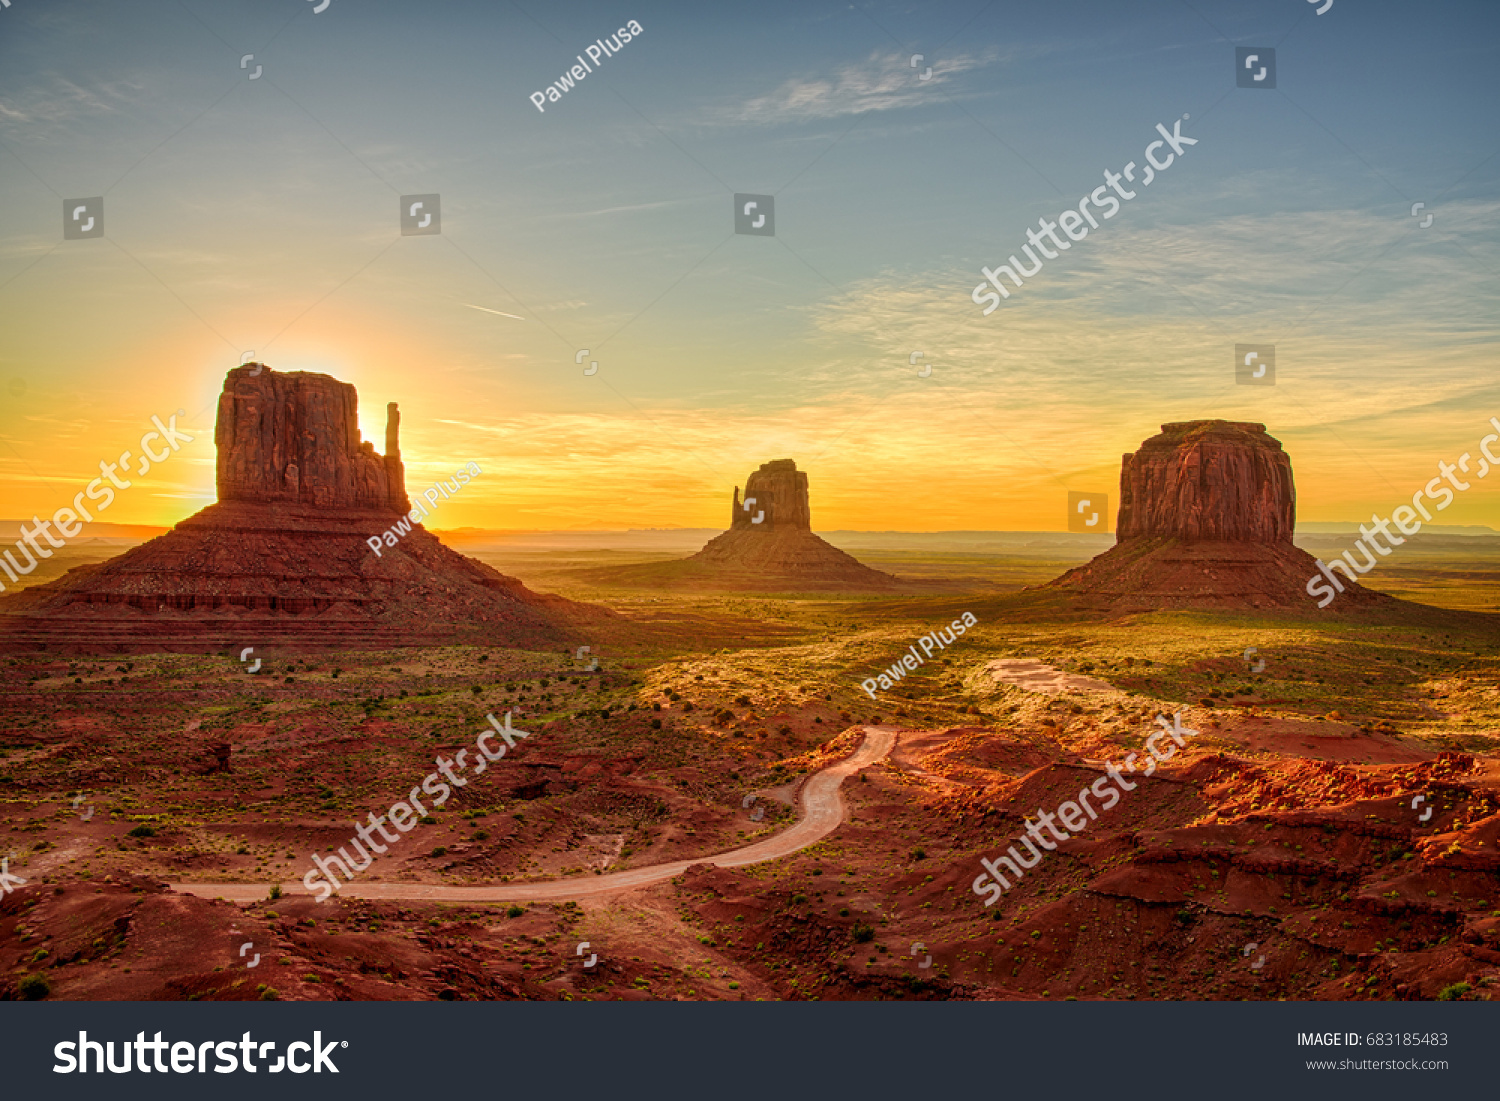 Sunrise view at Monument Valley, Arizona, USA #683185483